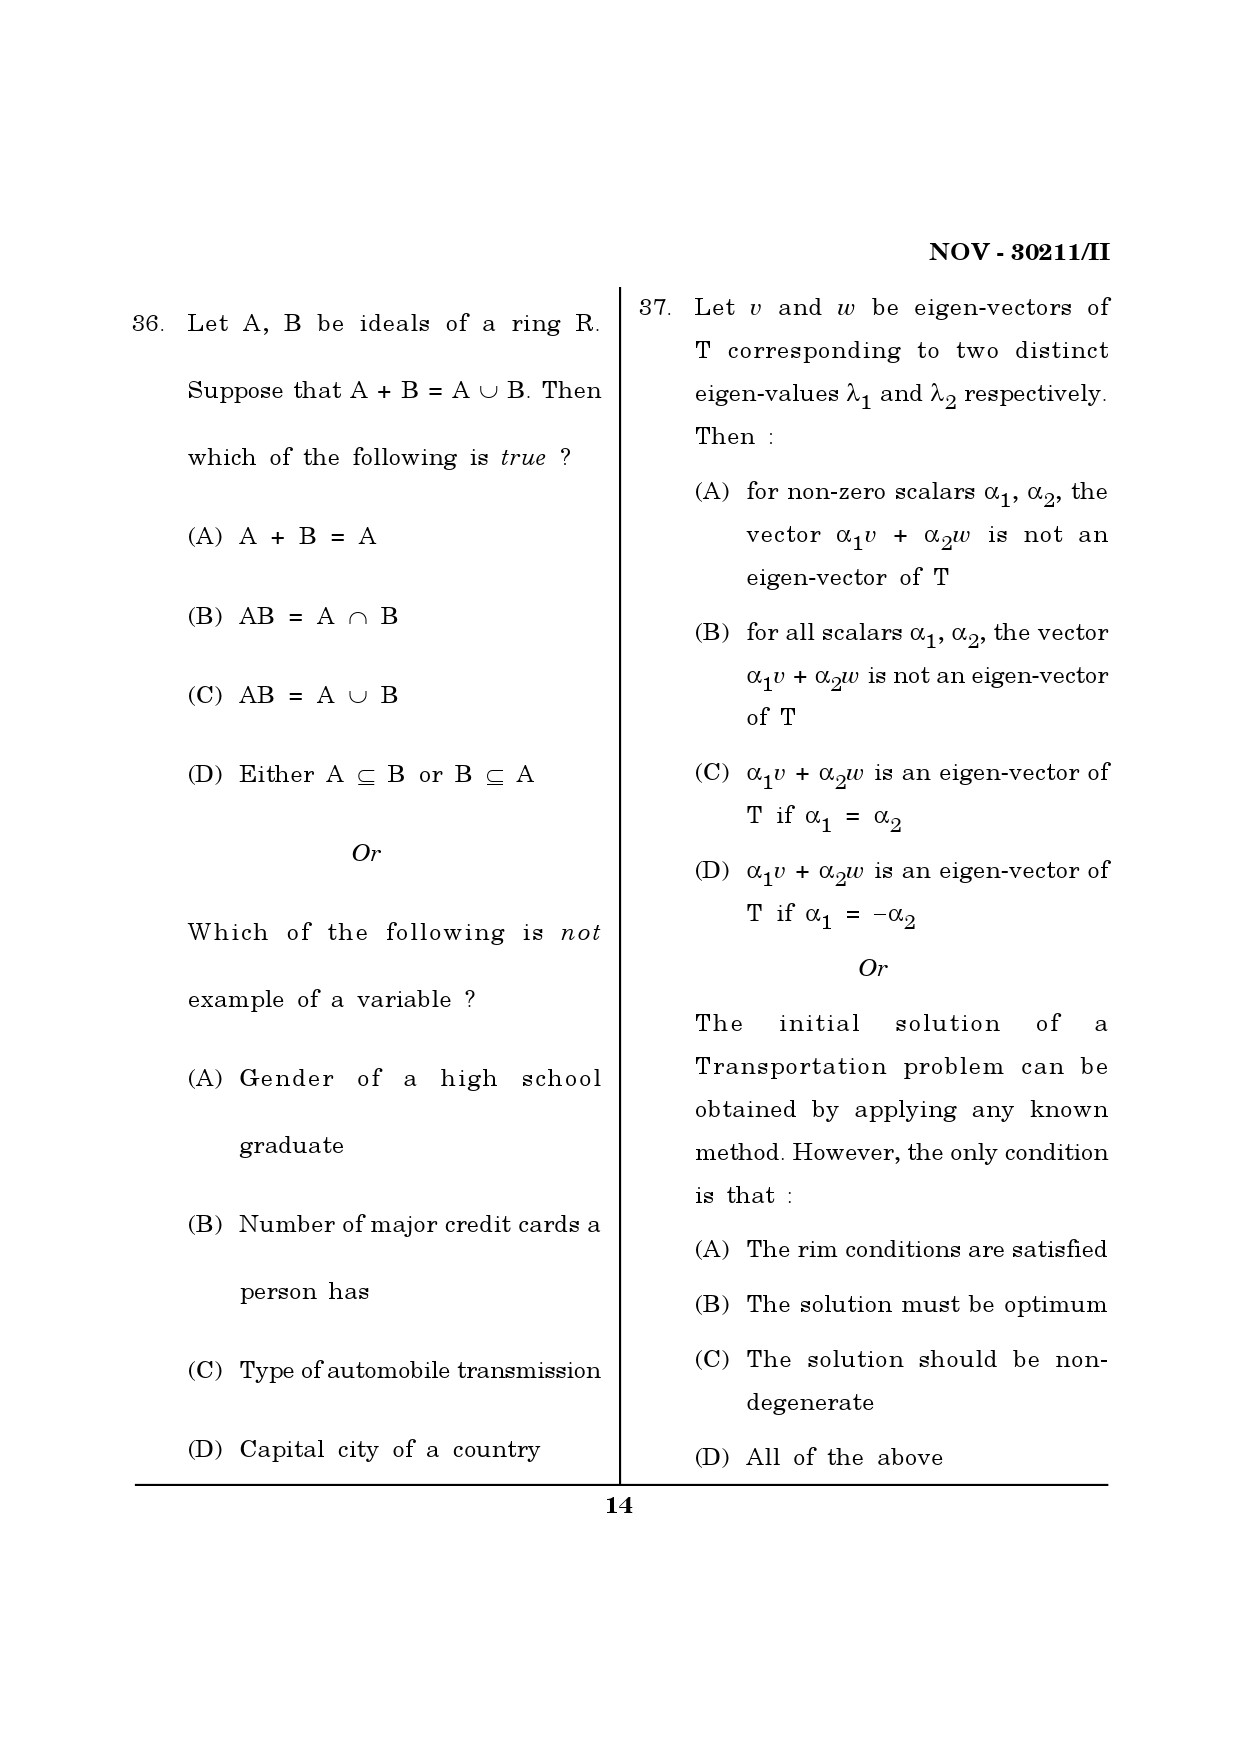 Maharashtra SET Mathematical Sciences Question Paper II November 2011 14